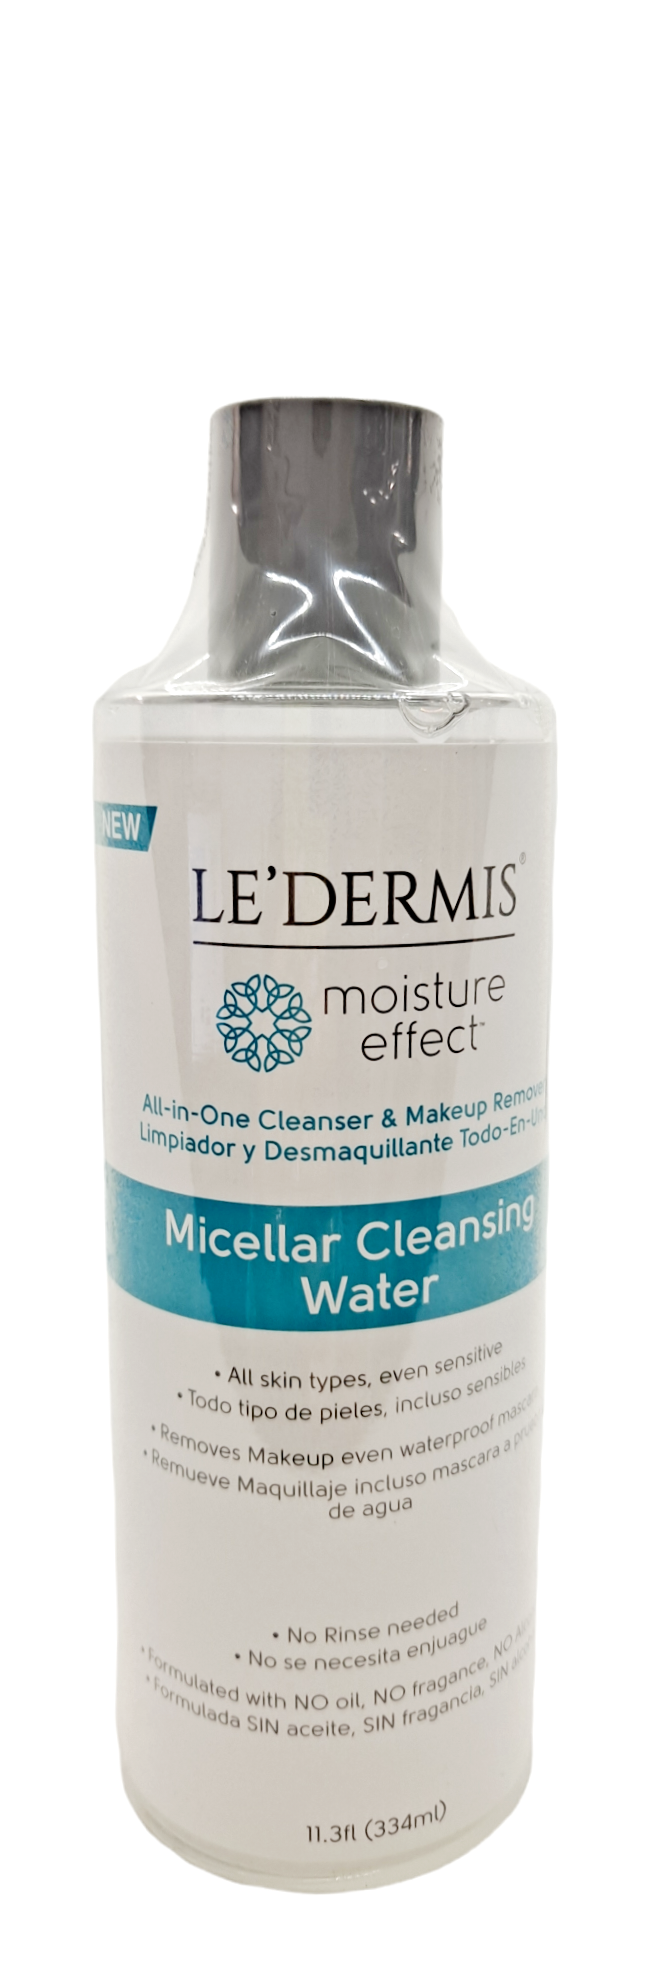 Ledermis Micellar Cleanser Water / 11.3fl